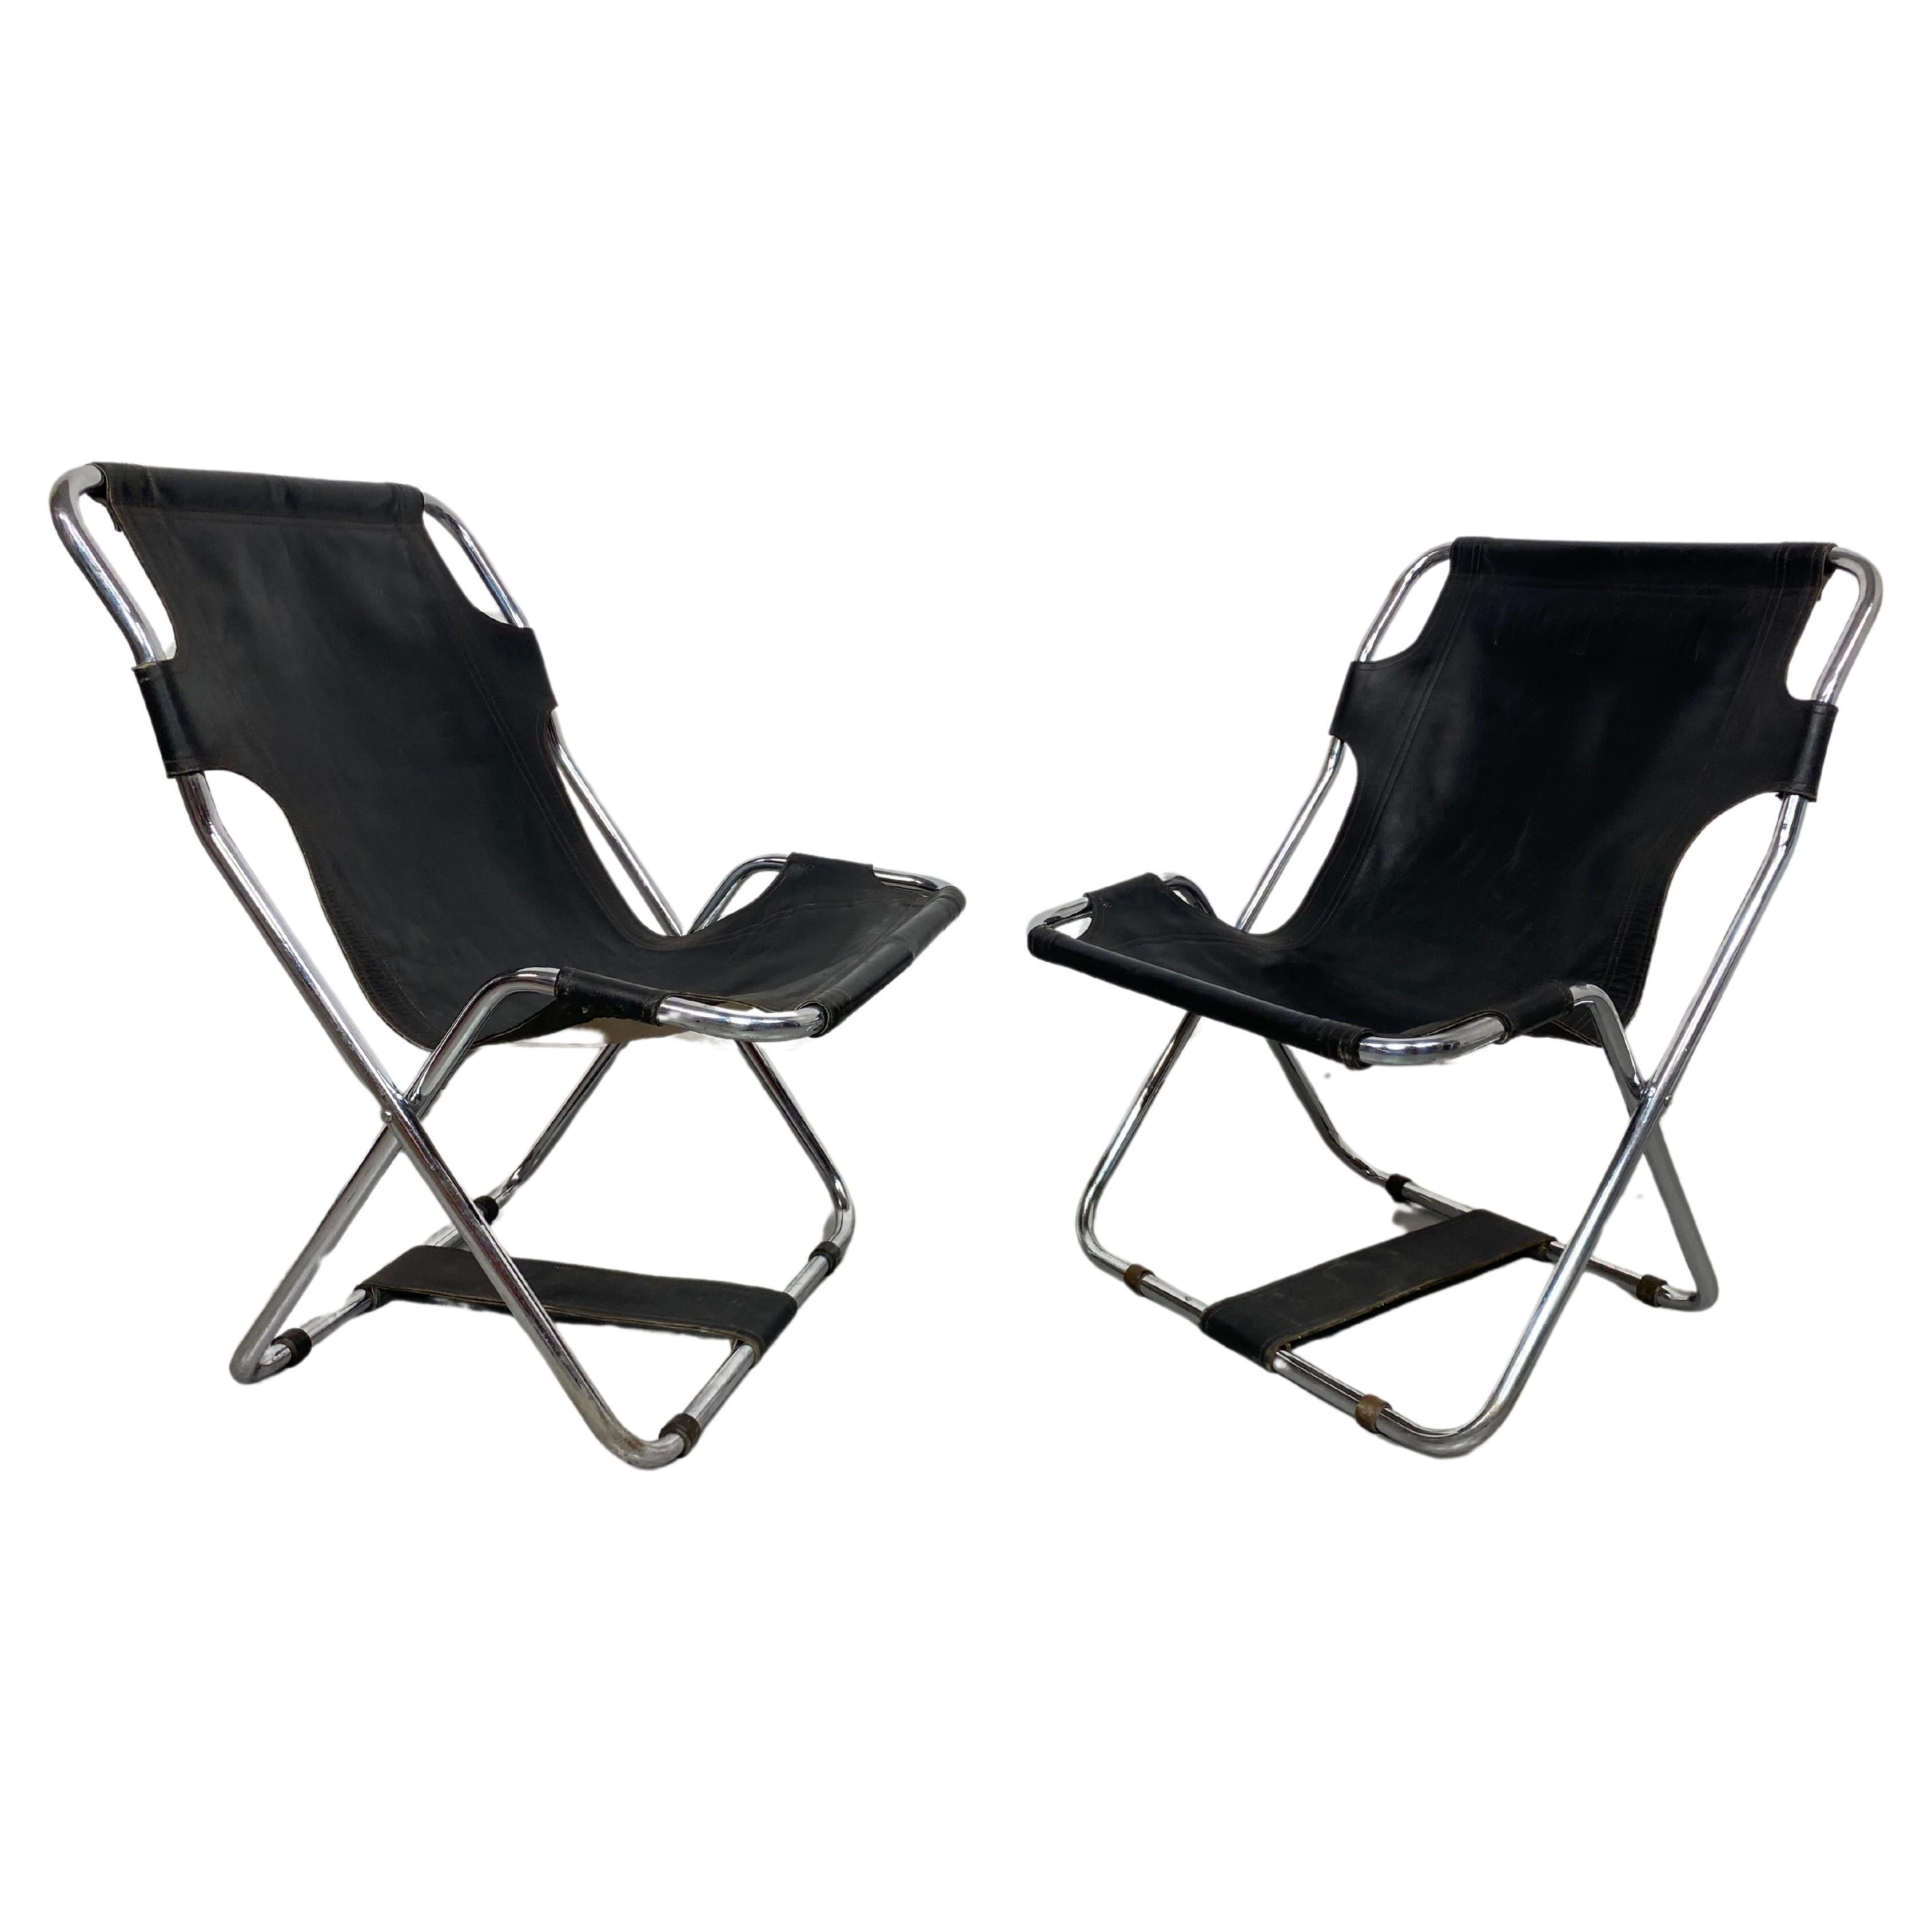 Bauhaus folding chairs For Sale